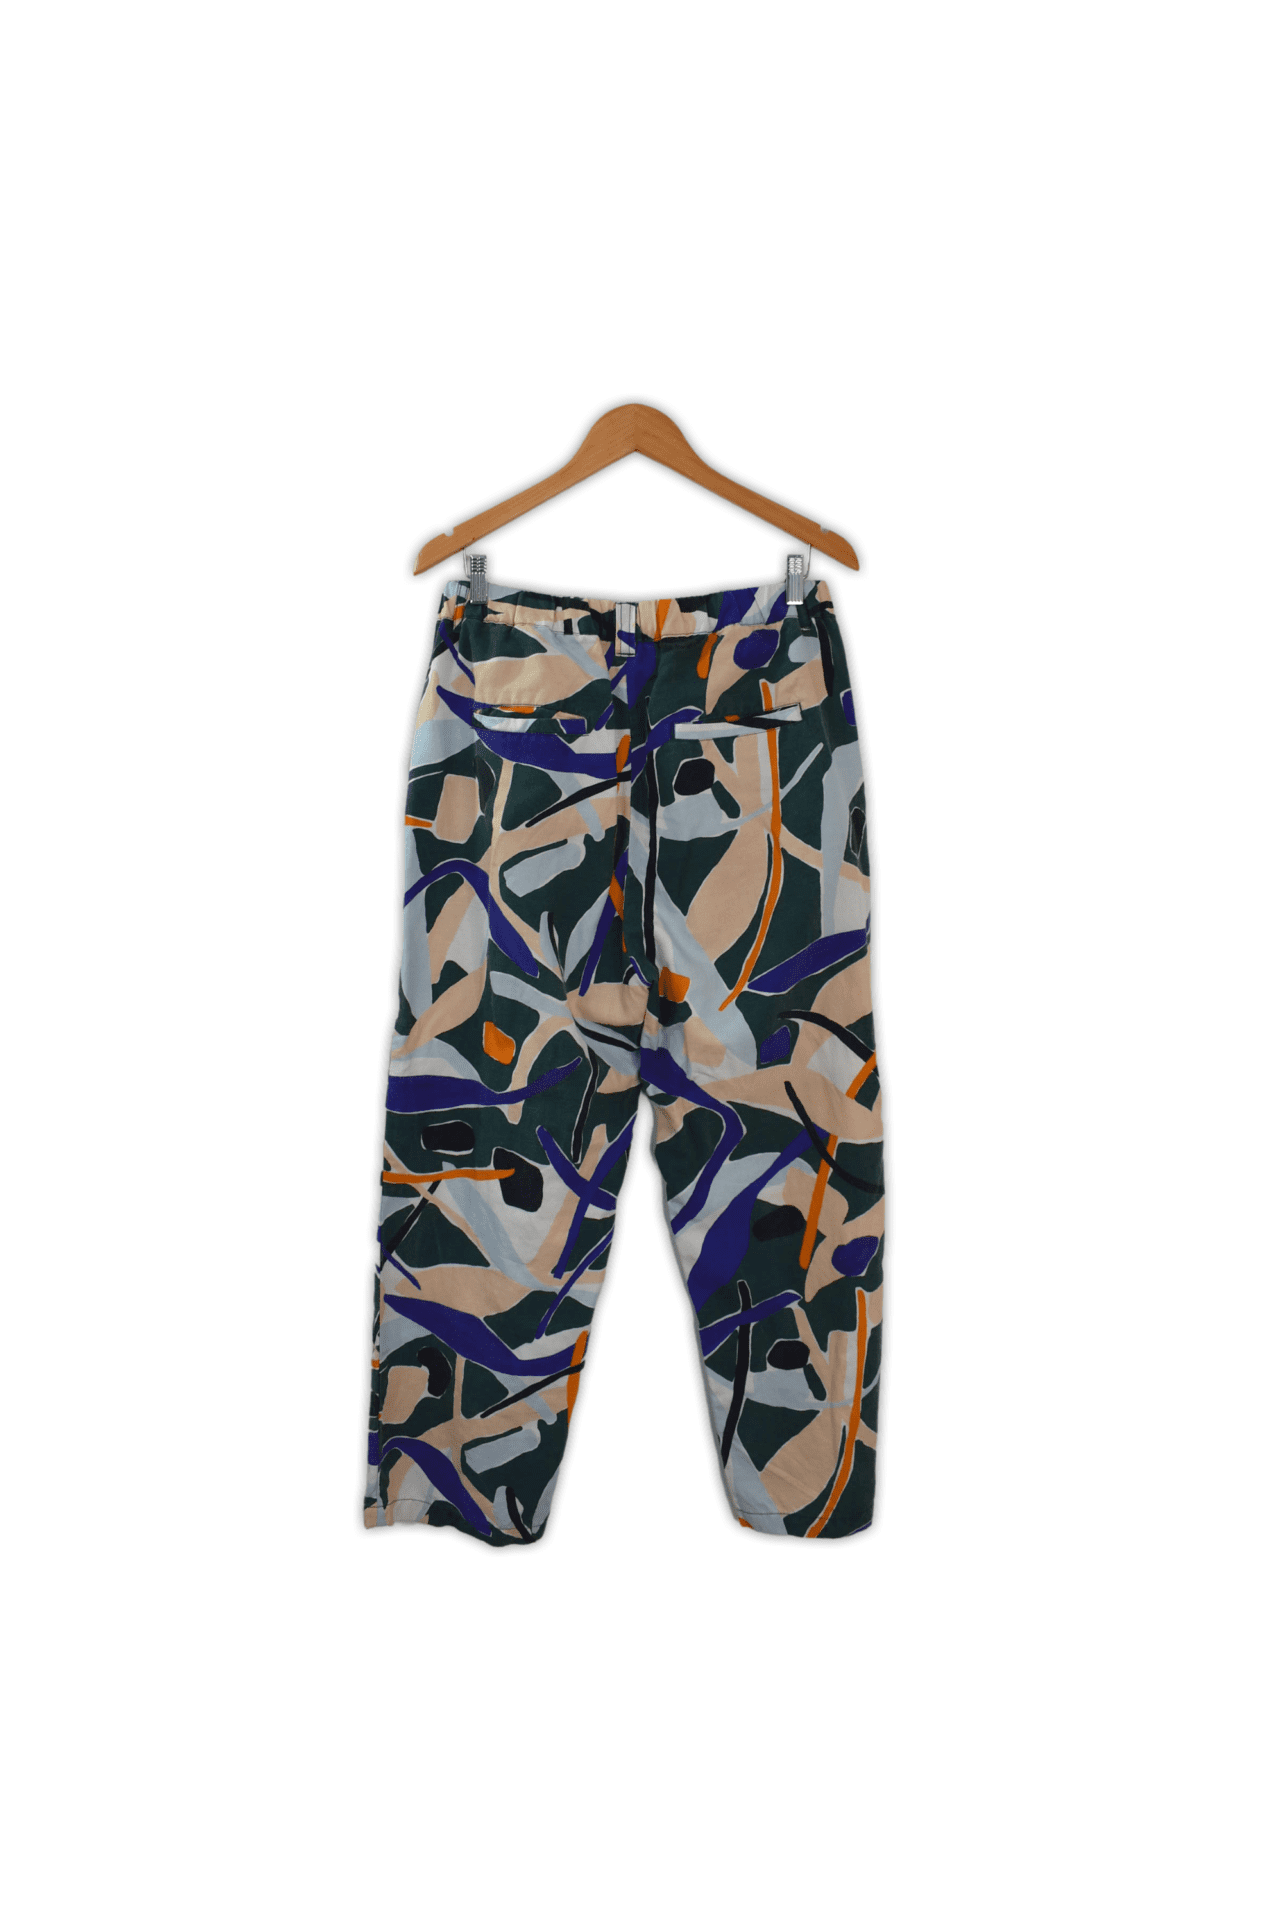 Medium, blue, purple, green and orange patterned soft tailored pants